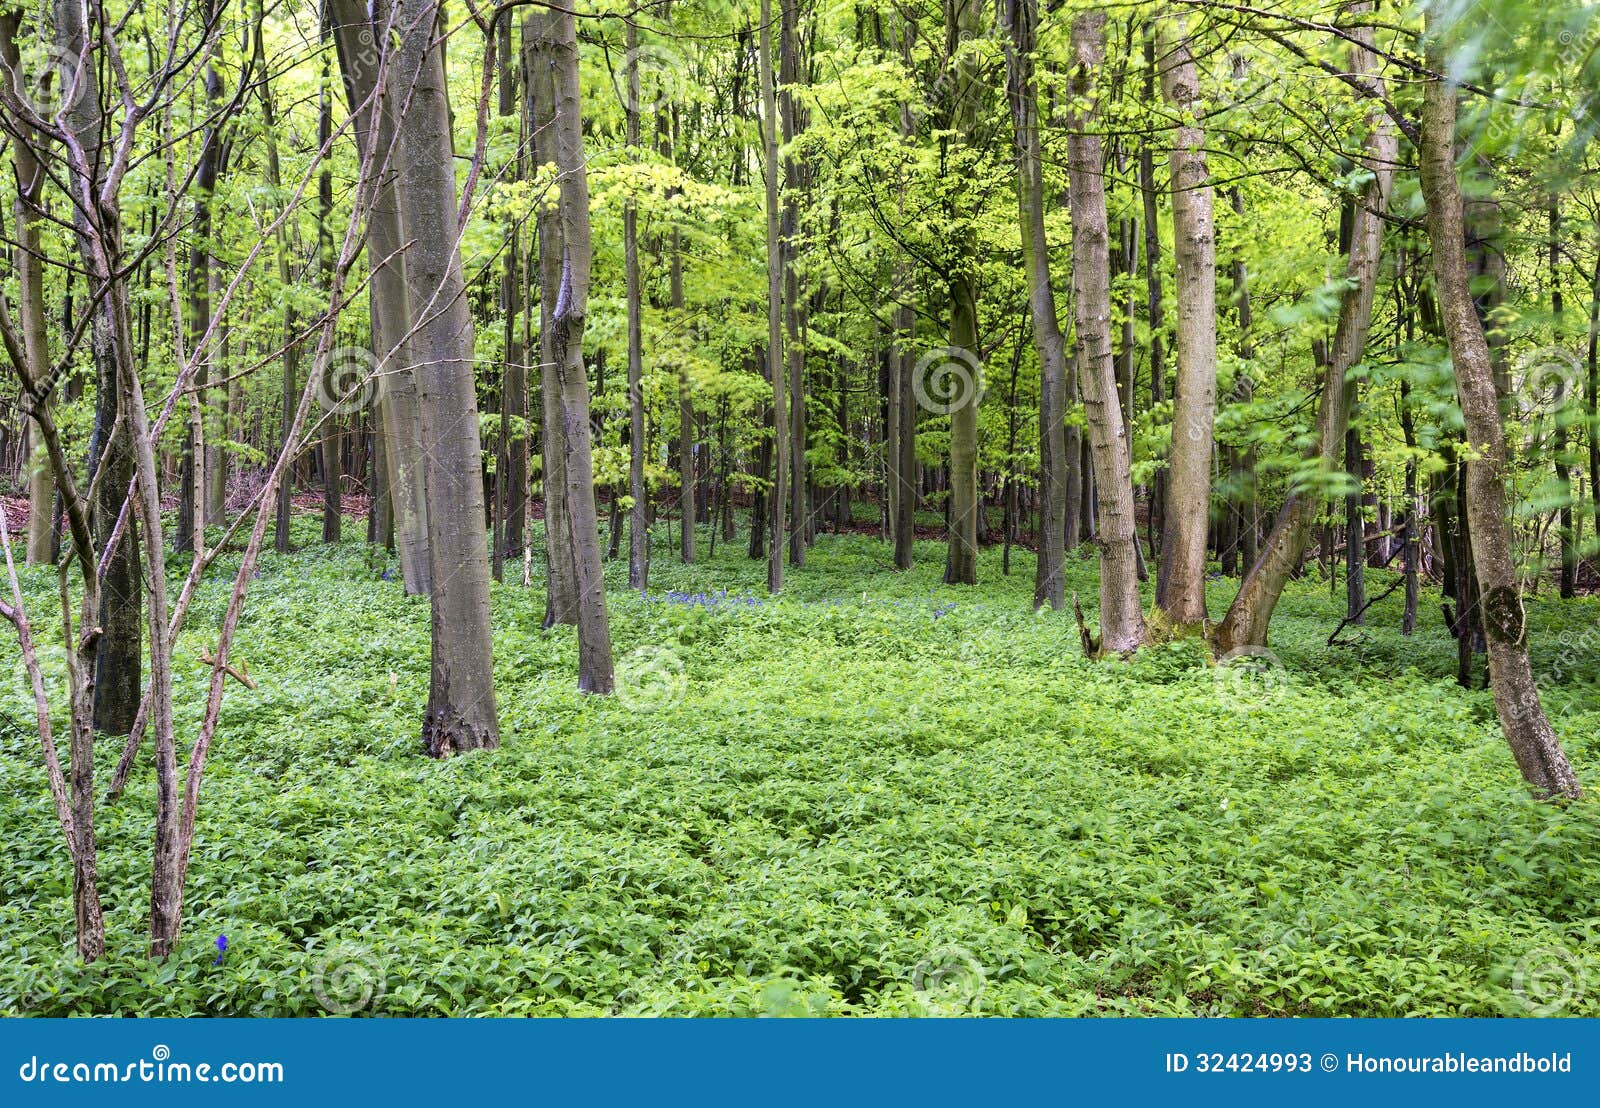 Vibrant Lush Green Spring Forest Landscape Stock Image - Image of vivid ...